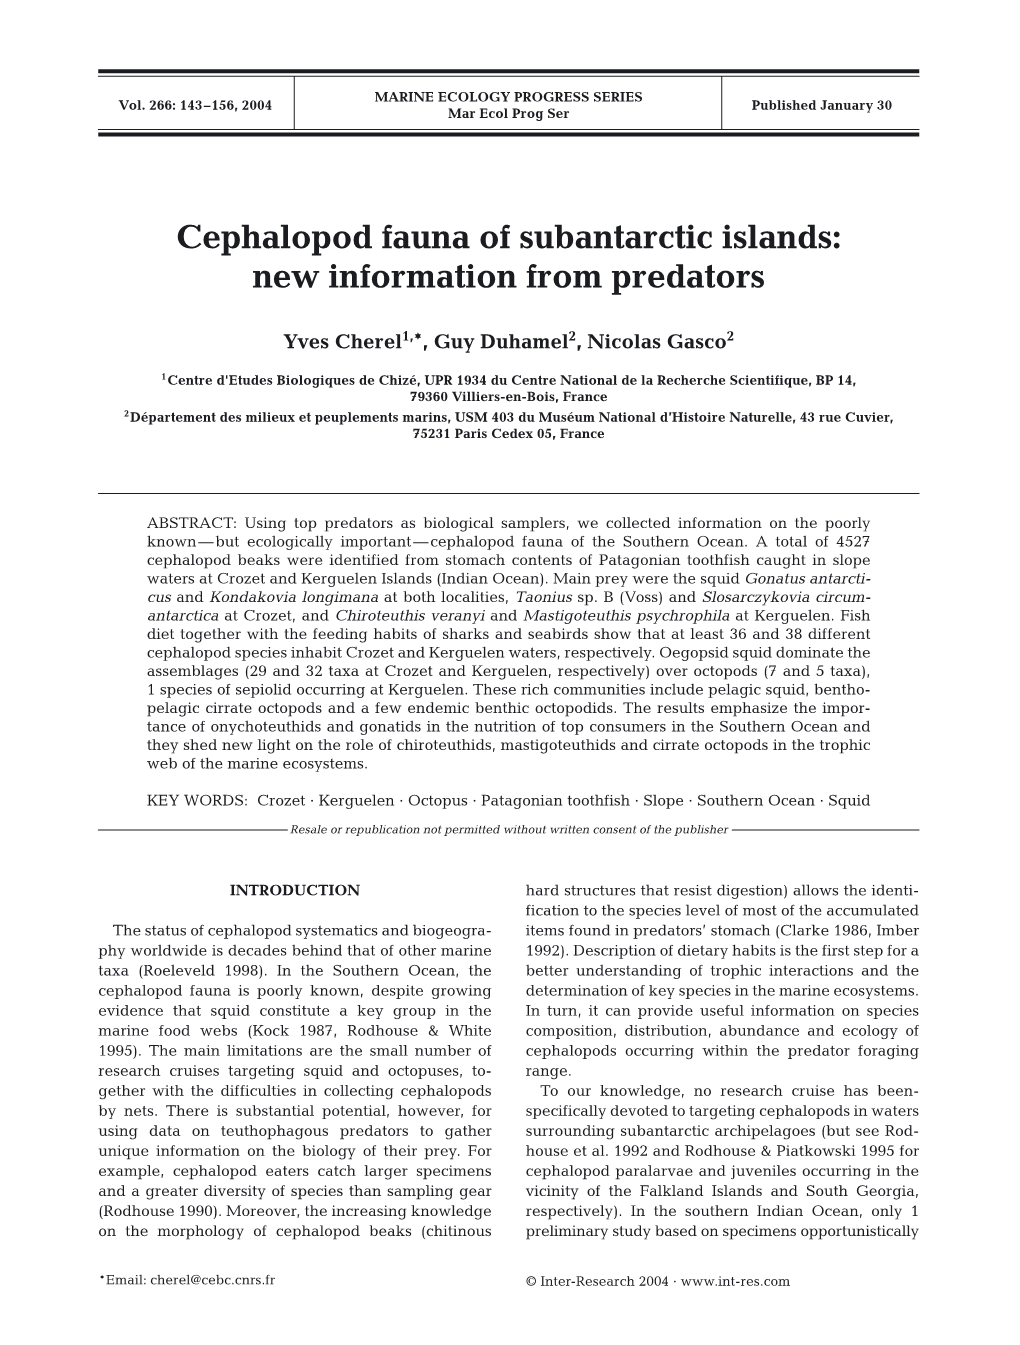 Cephalopod Fauna of Subantarctic Islands: New Information from Predators